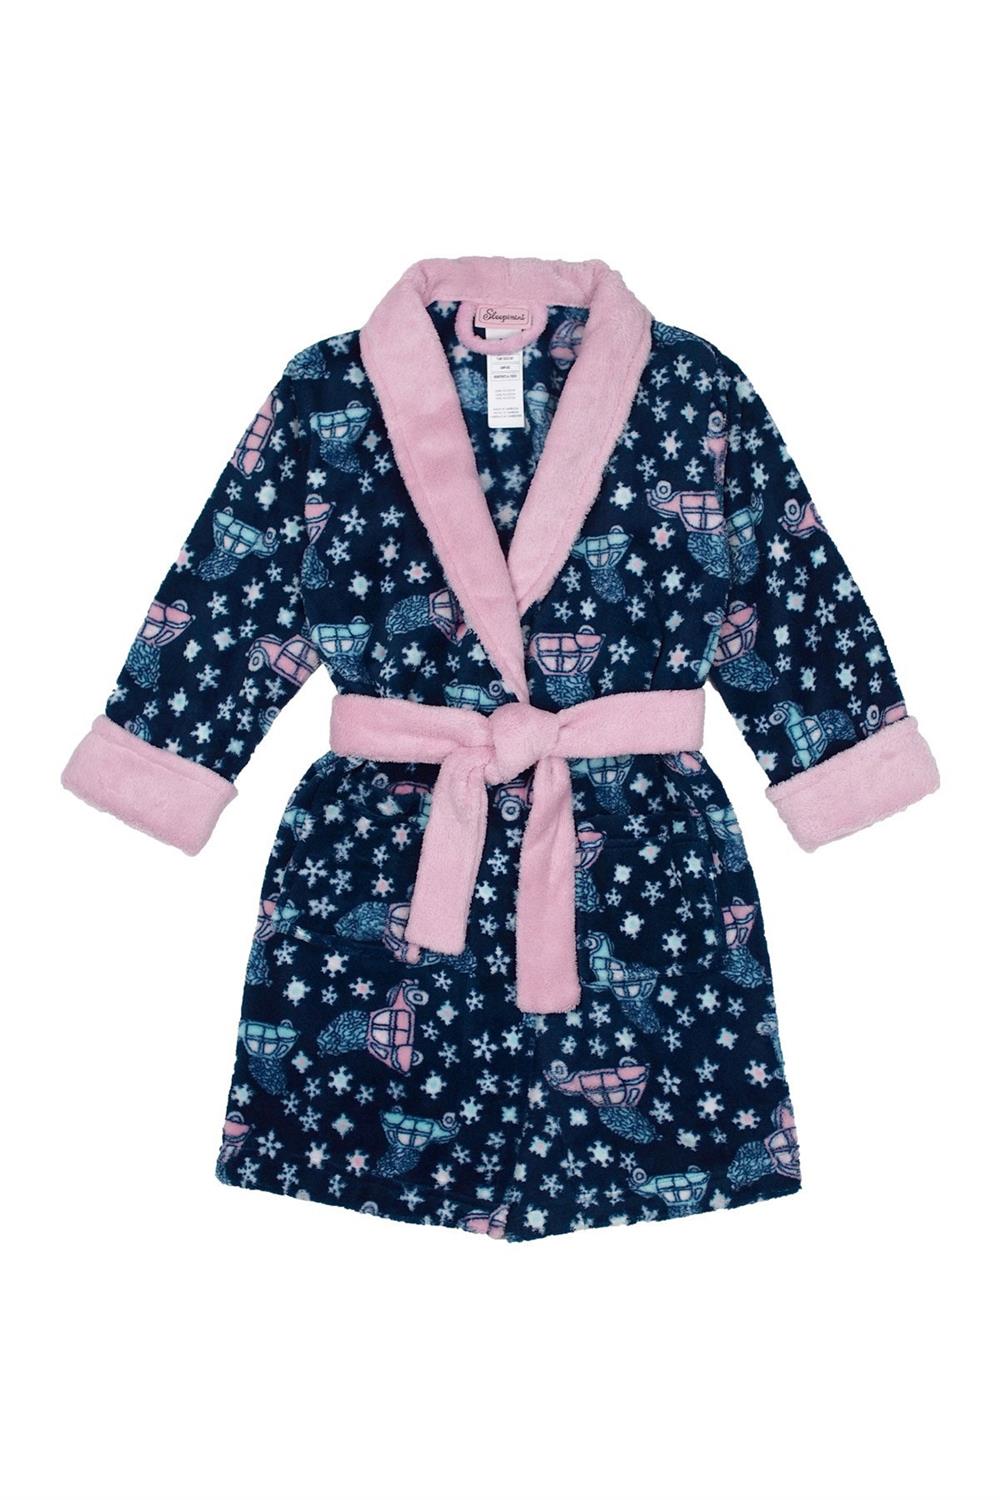 Sleepimini Girls 4-6X Robe Microfleece Soft Plush Bathrobe with Pockets